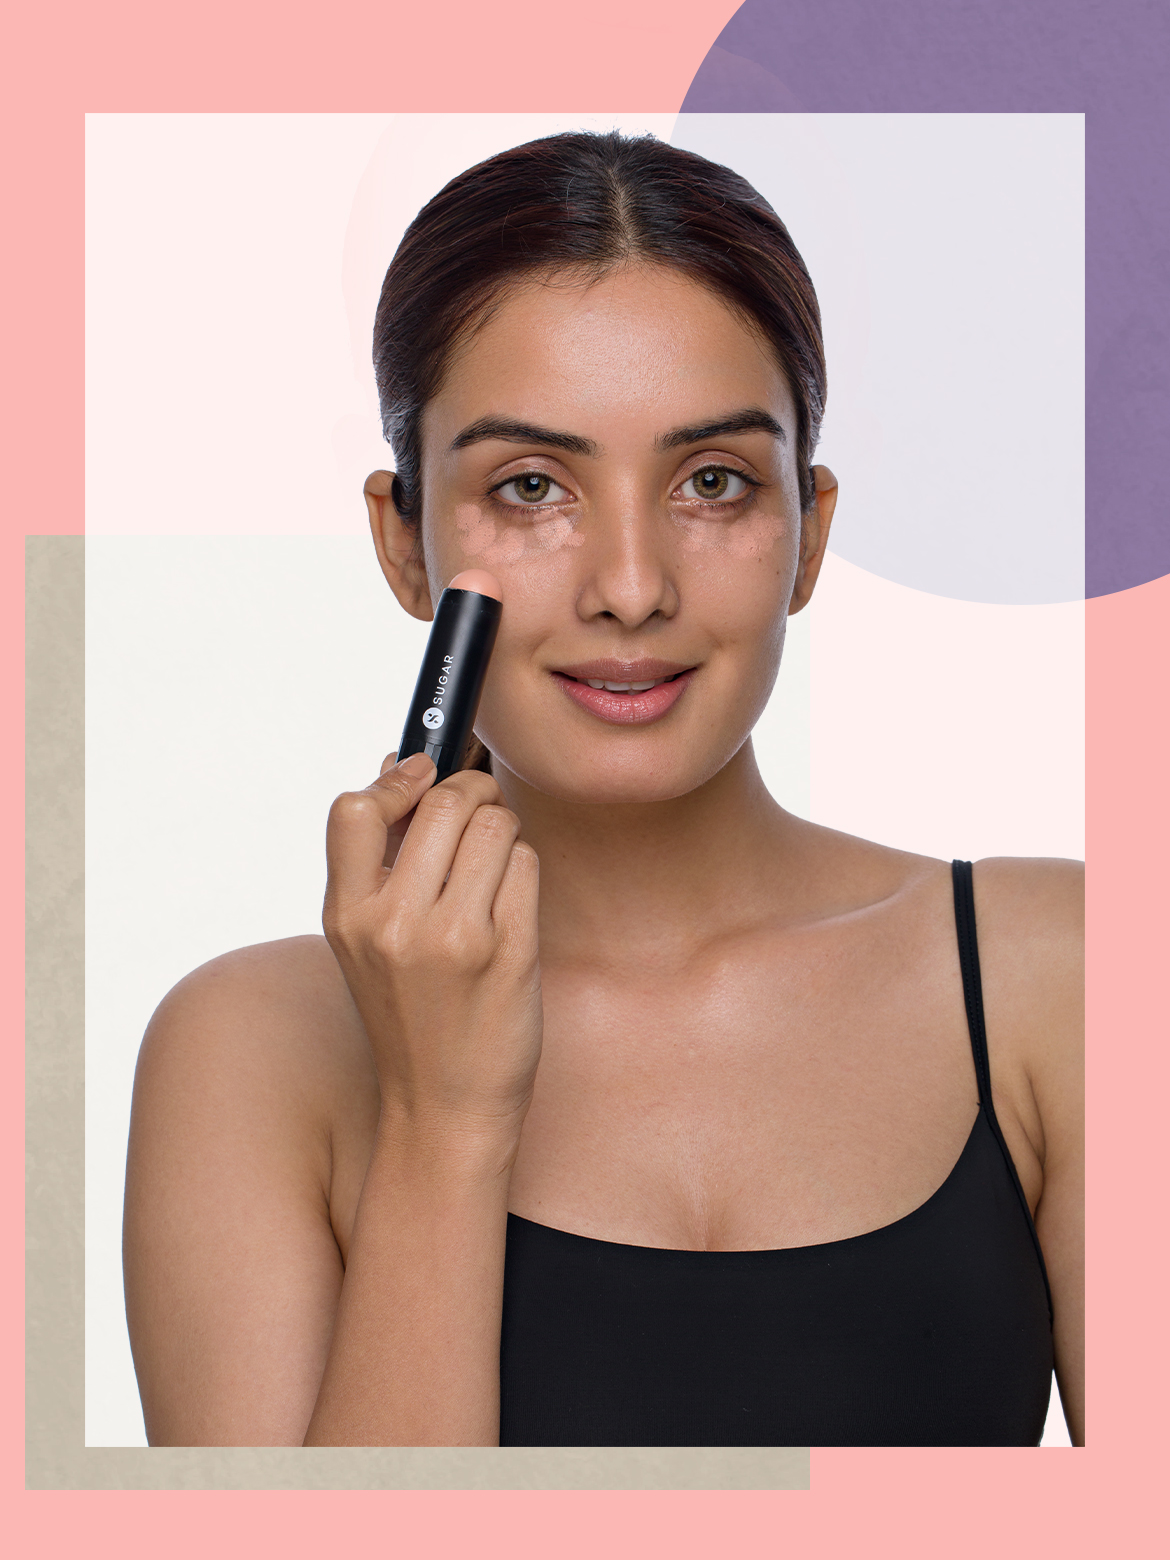 makeup tips for dark circles under eyes